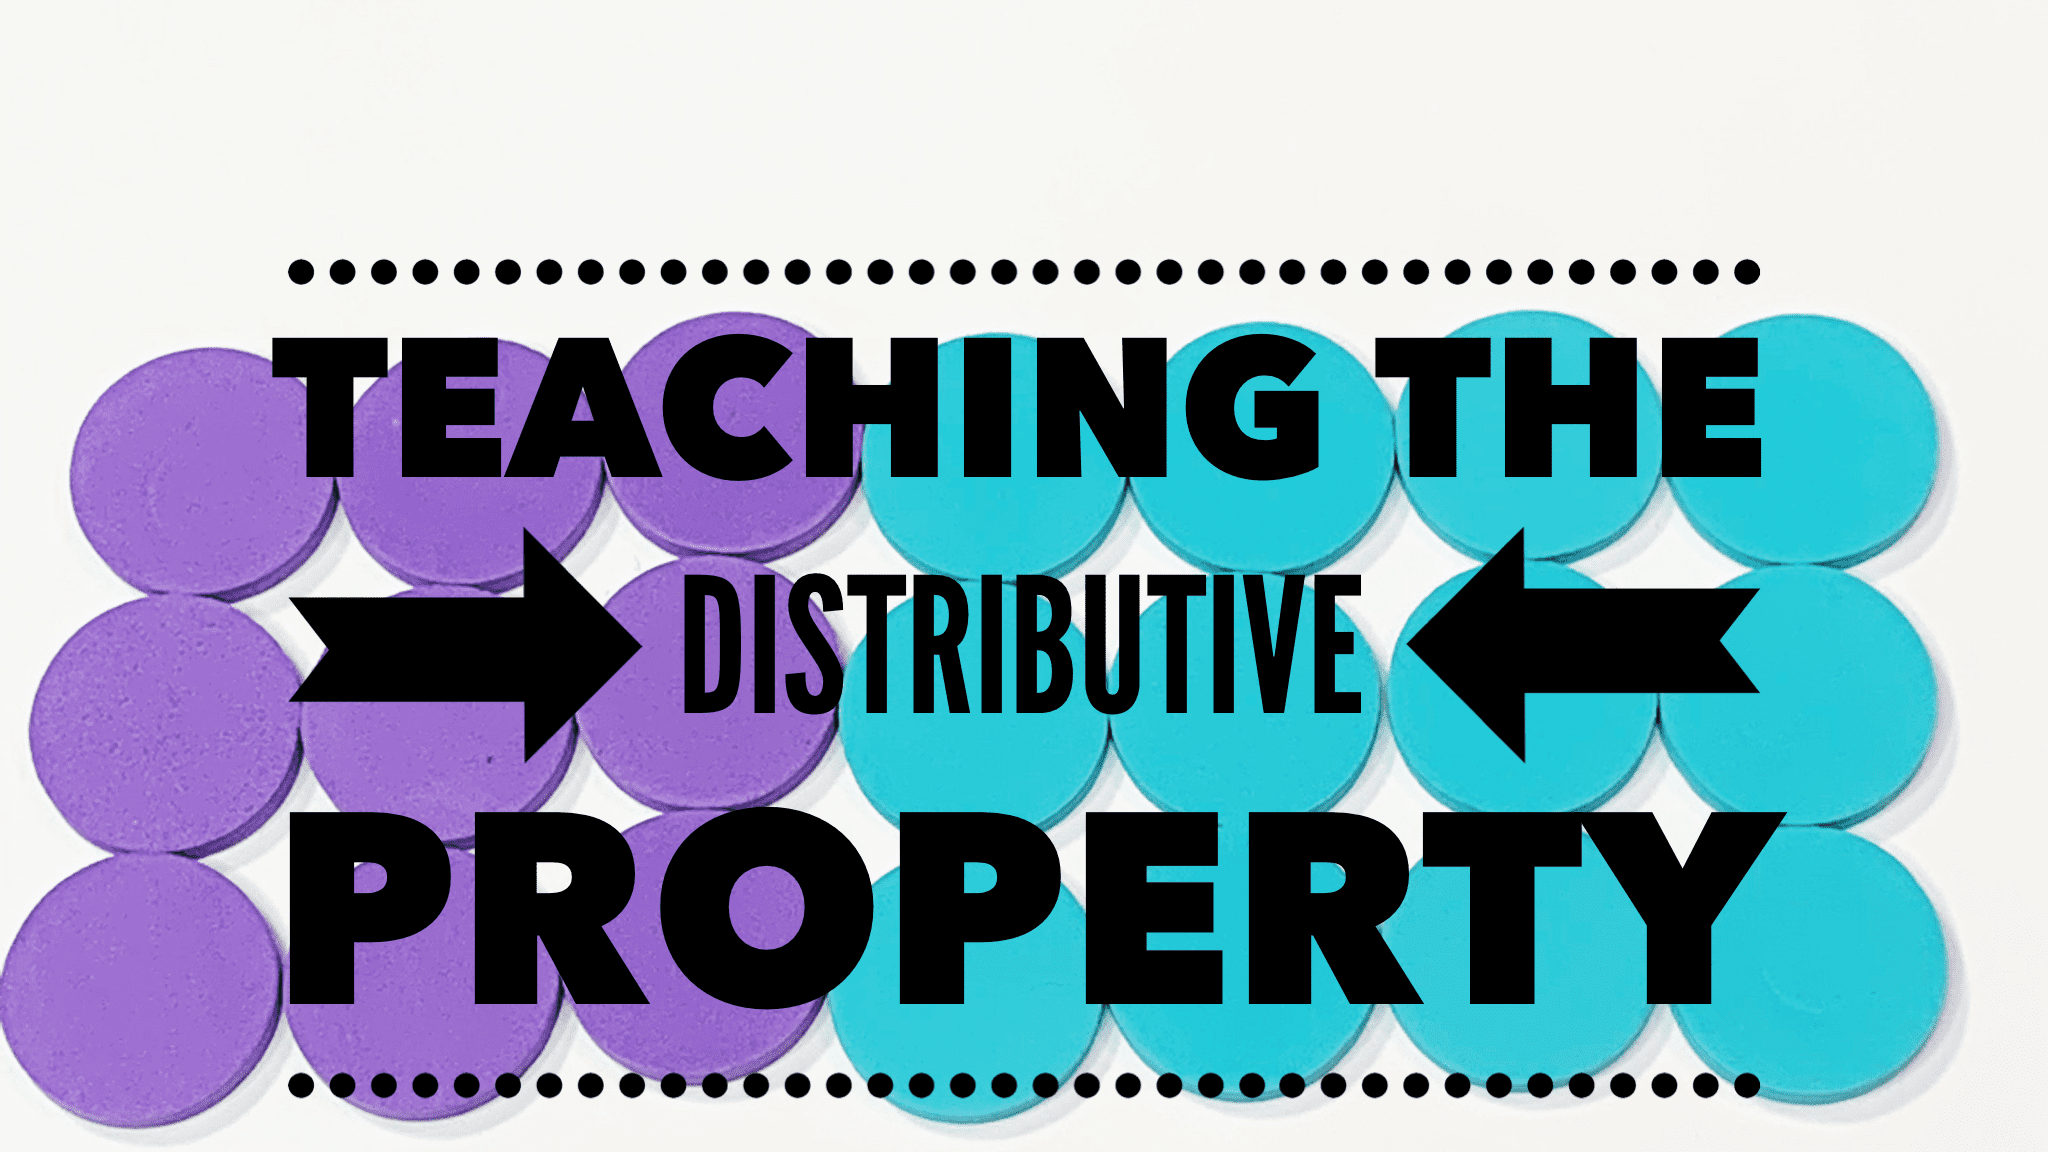 distributive property